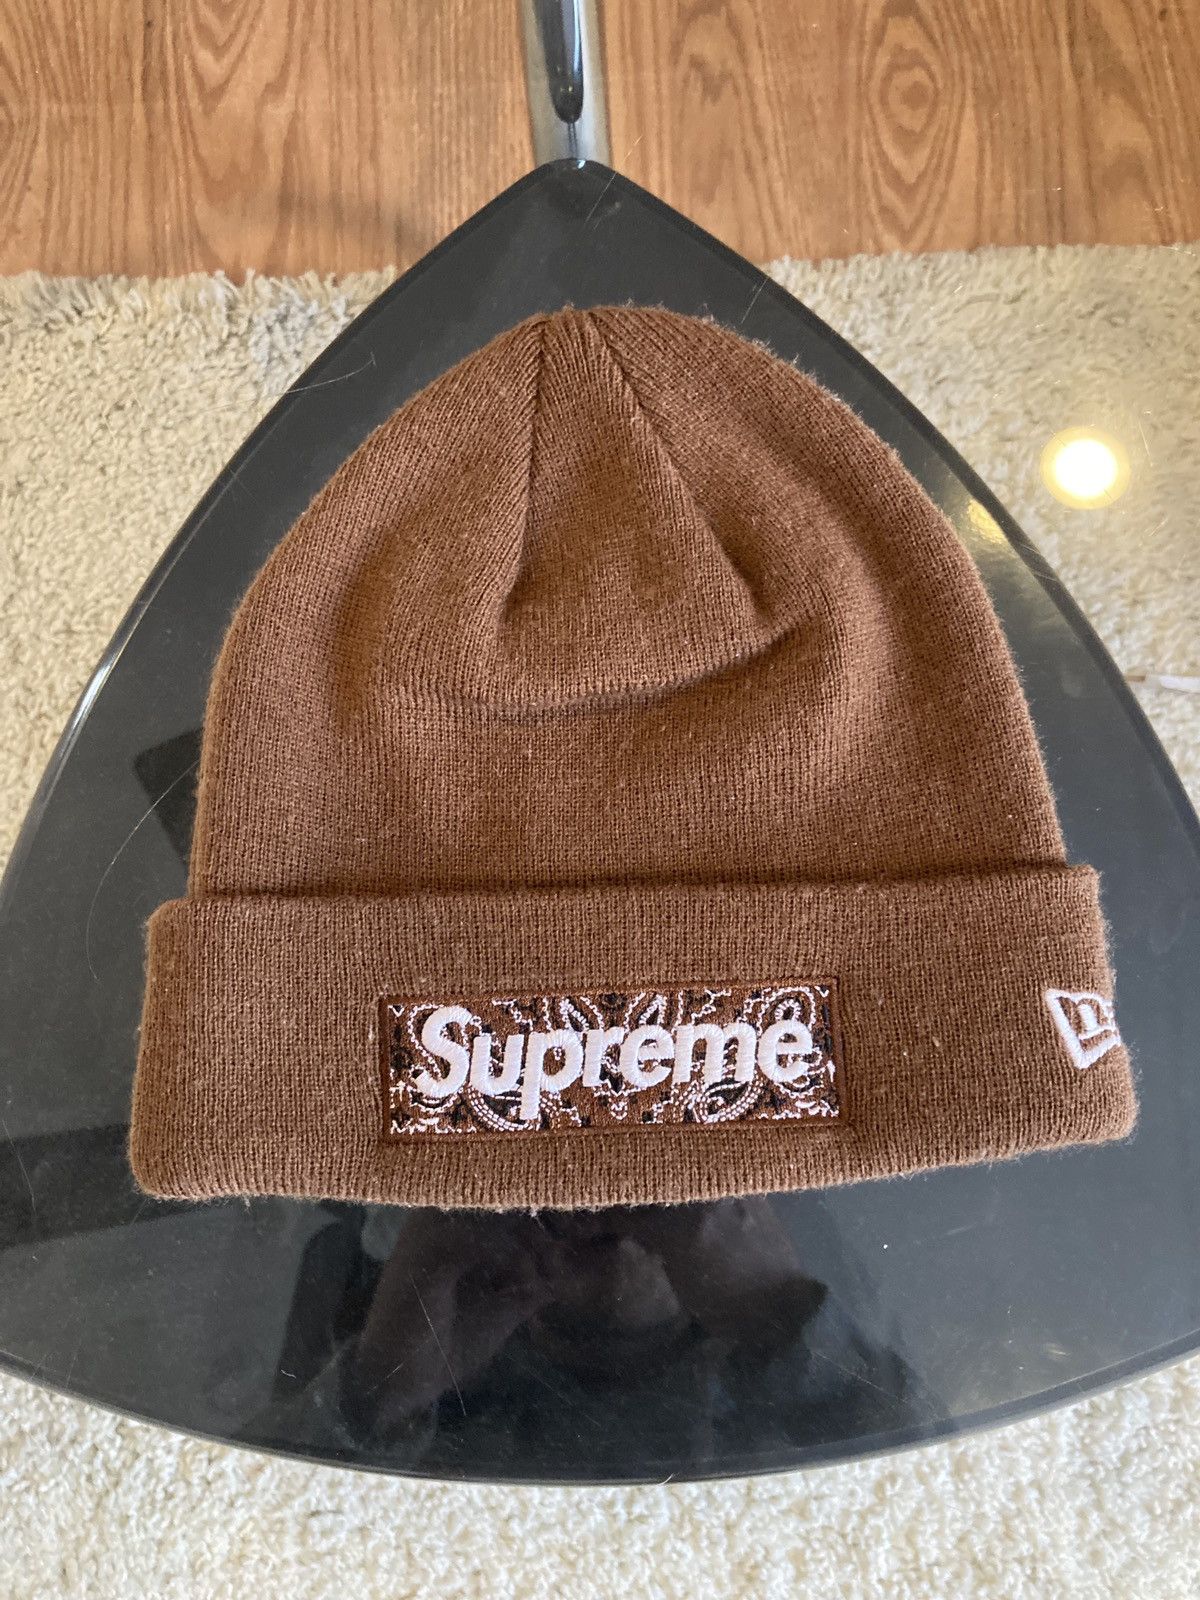 Supreme Supreme x New Era Brown Box Logo Beanie, Grailed